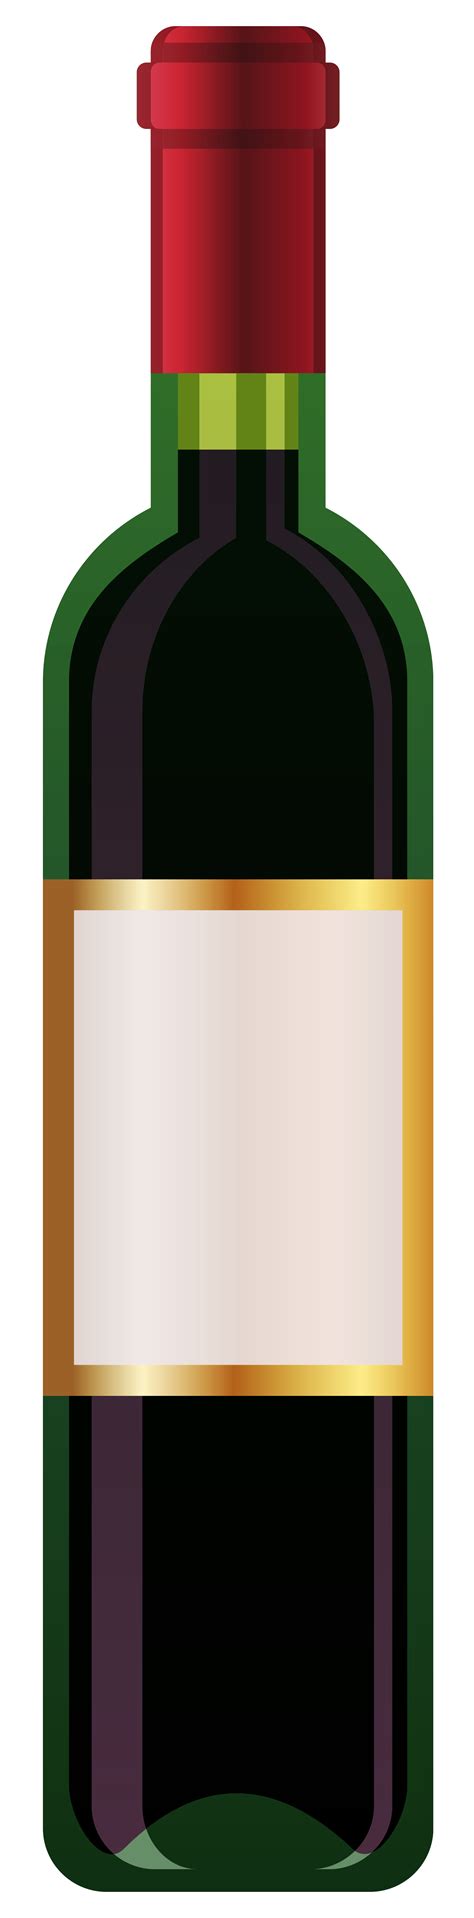 Grapevine Clipart Wine Bottle Grapevine Wine Bottle Transparent Free